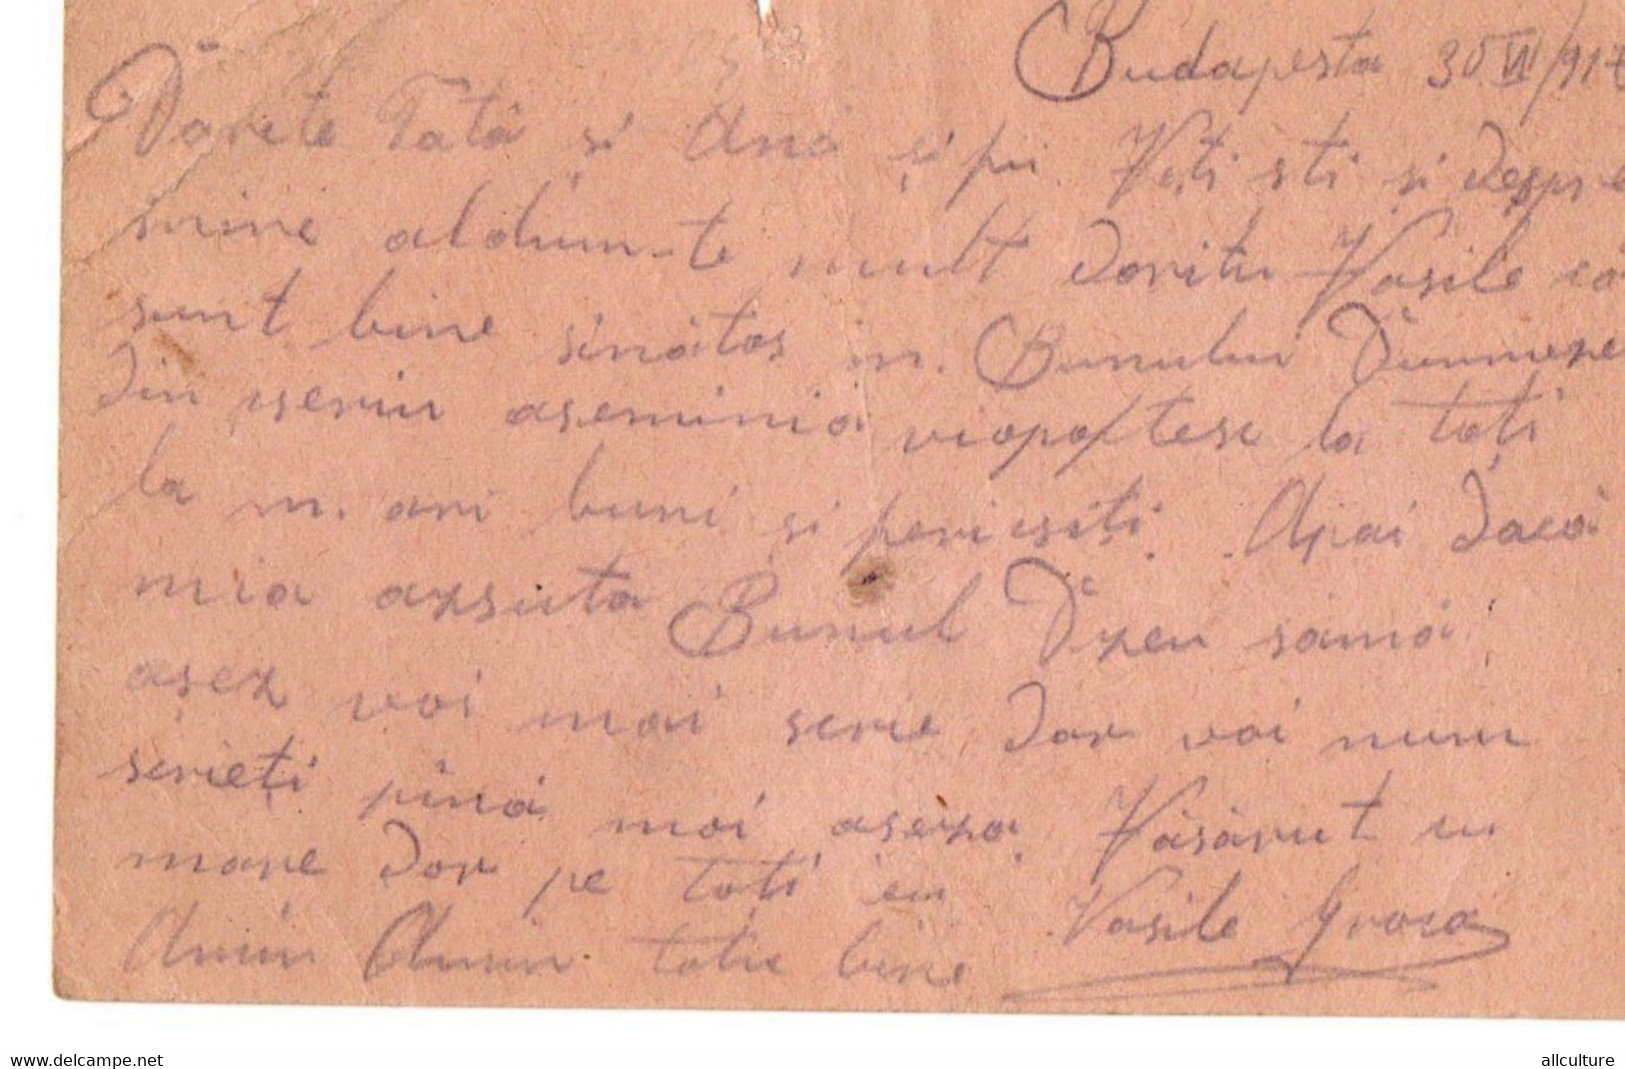 A116  -  BUDAPEST  LEVELEZOLAP TO APAHIDA KOLOSVAR ROMANIA  1WW 1917 - World War 1 Letters